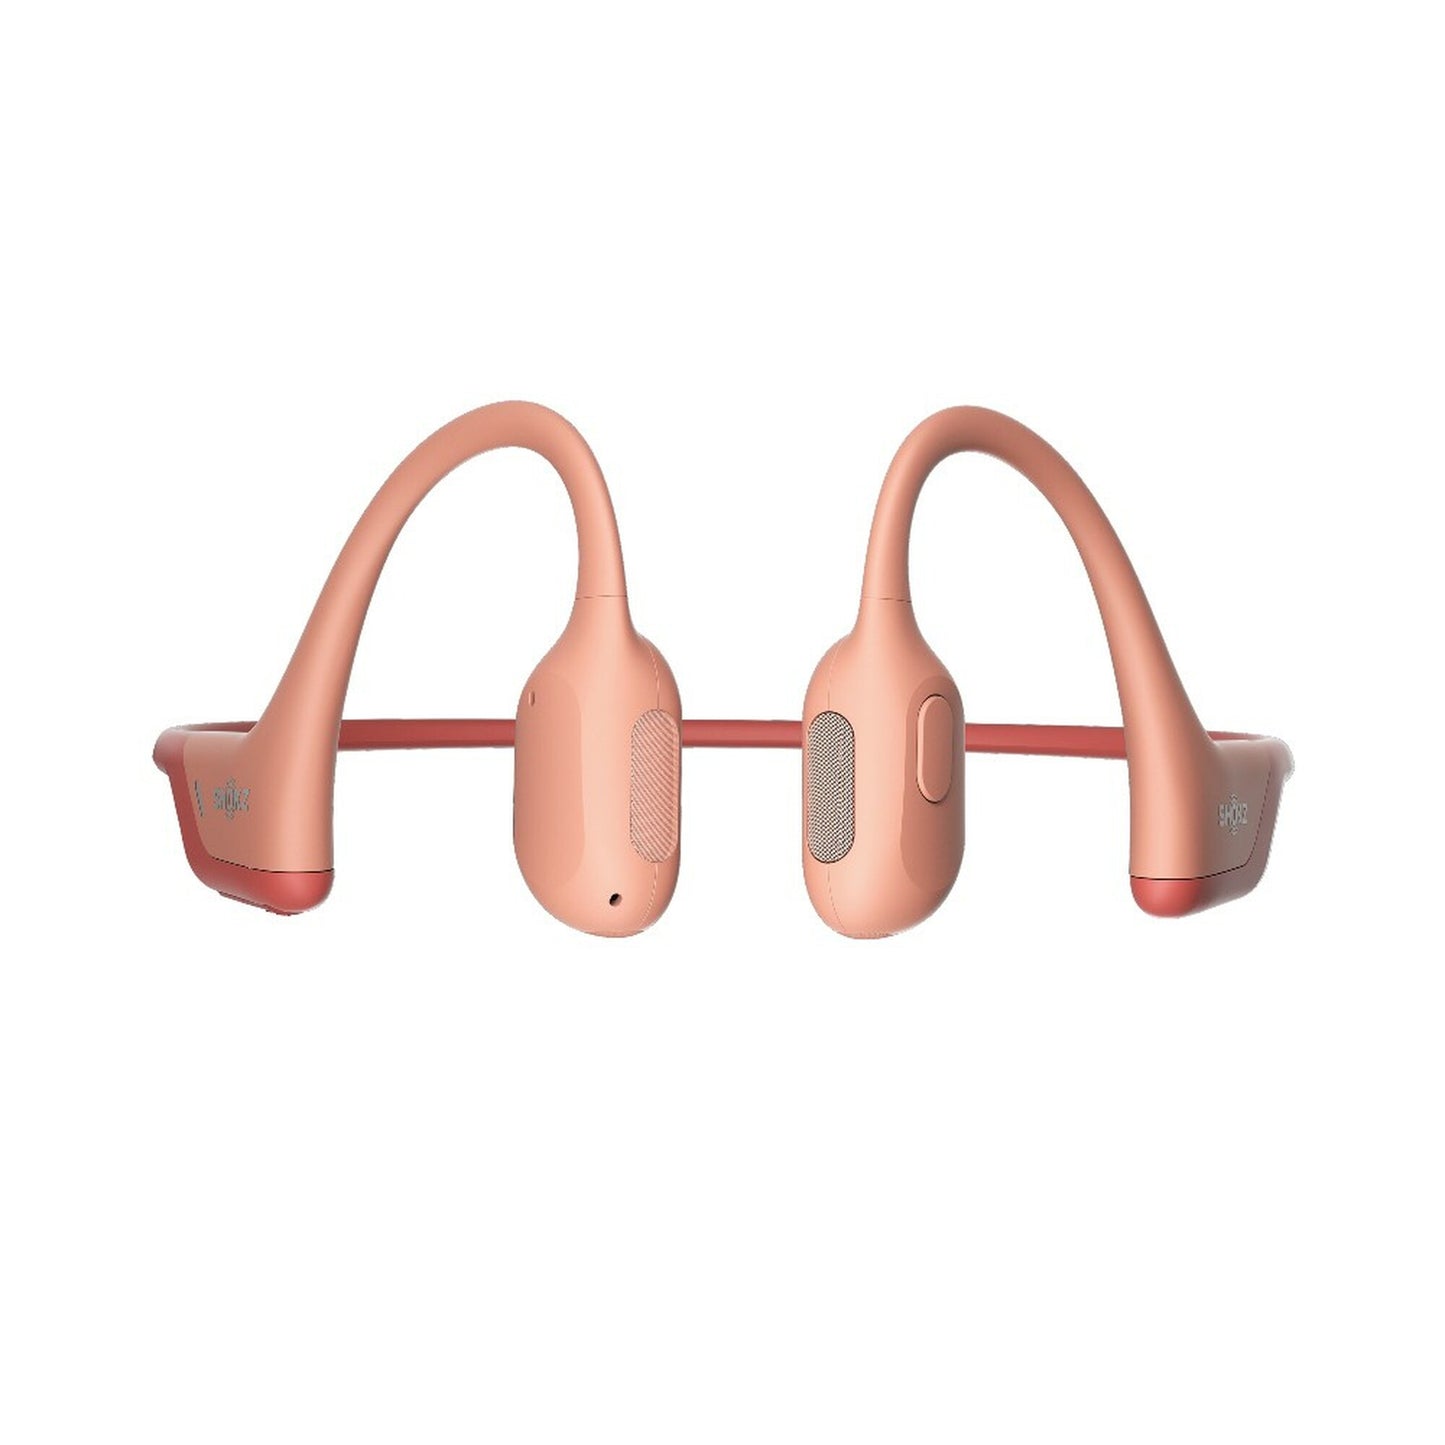 SHOKZ OPENRUN PRO Premium Bone Conduction Open-Ear Headphones (Pink)